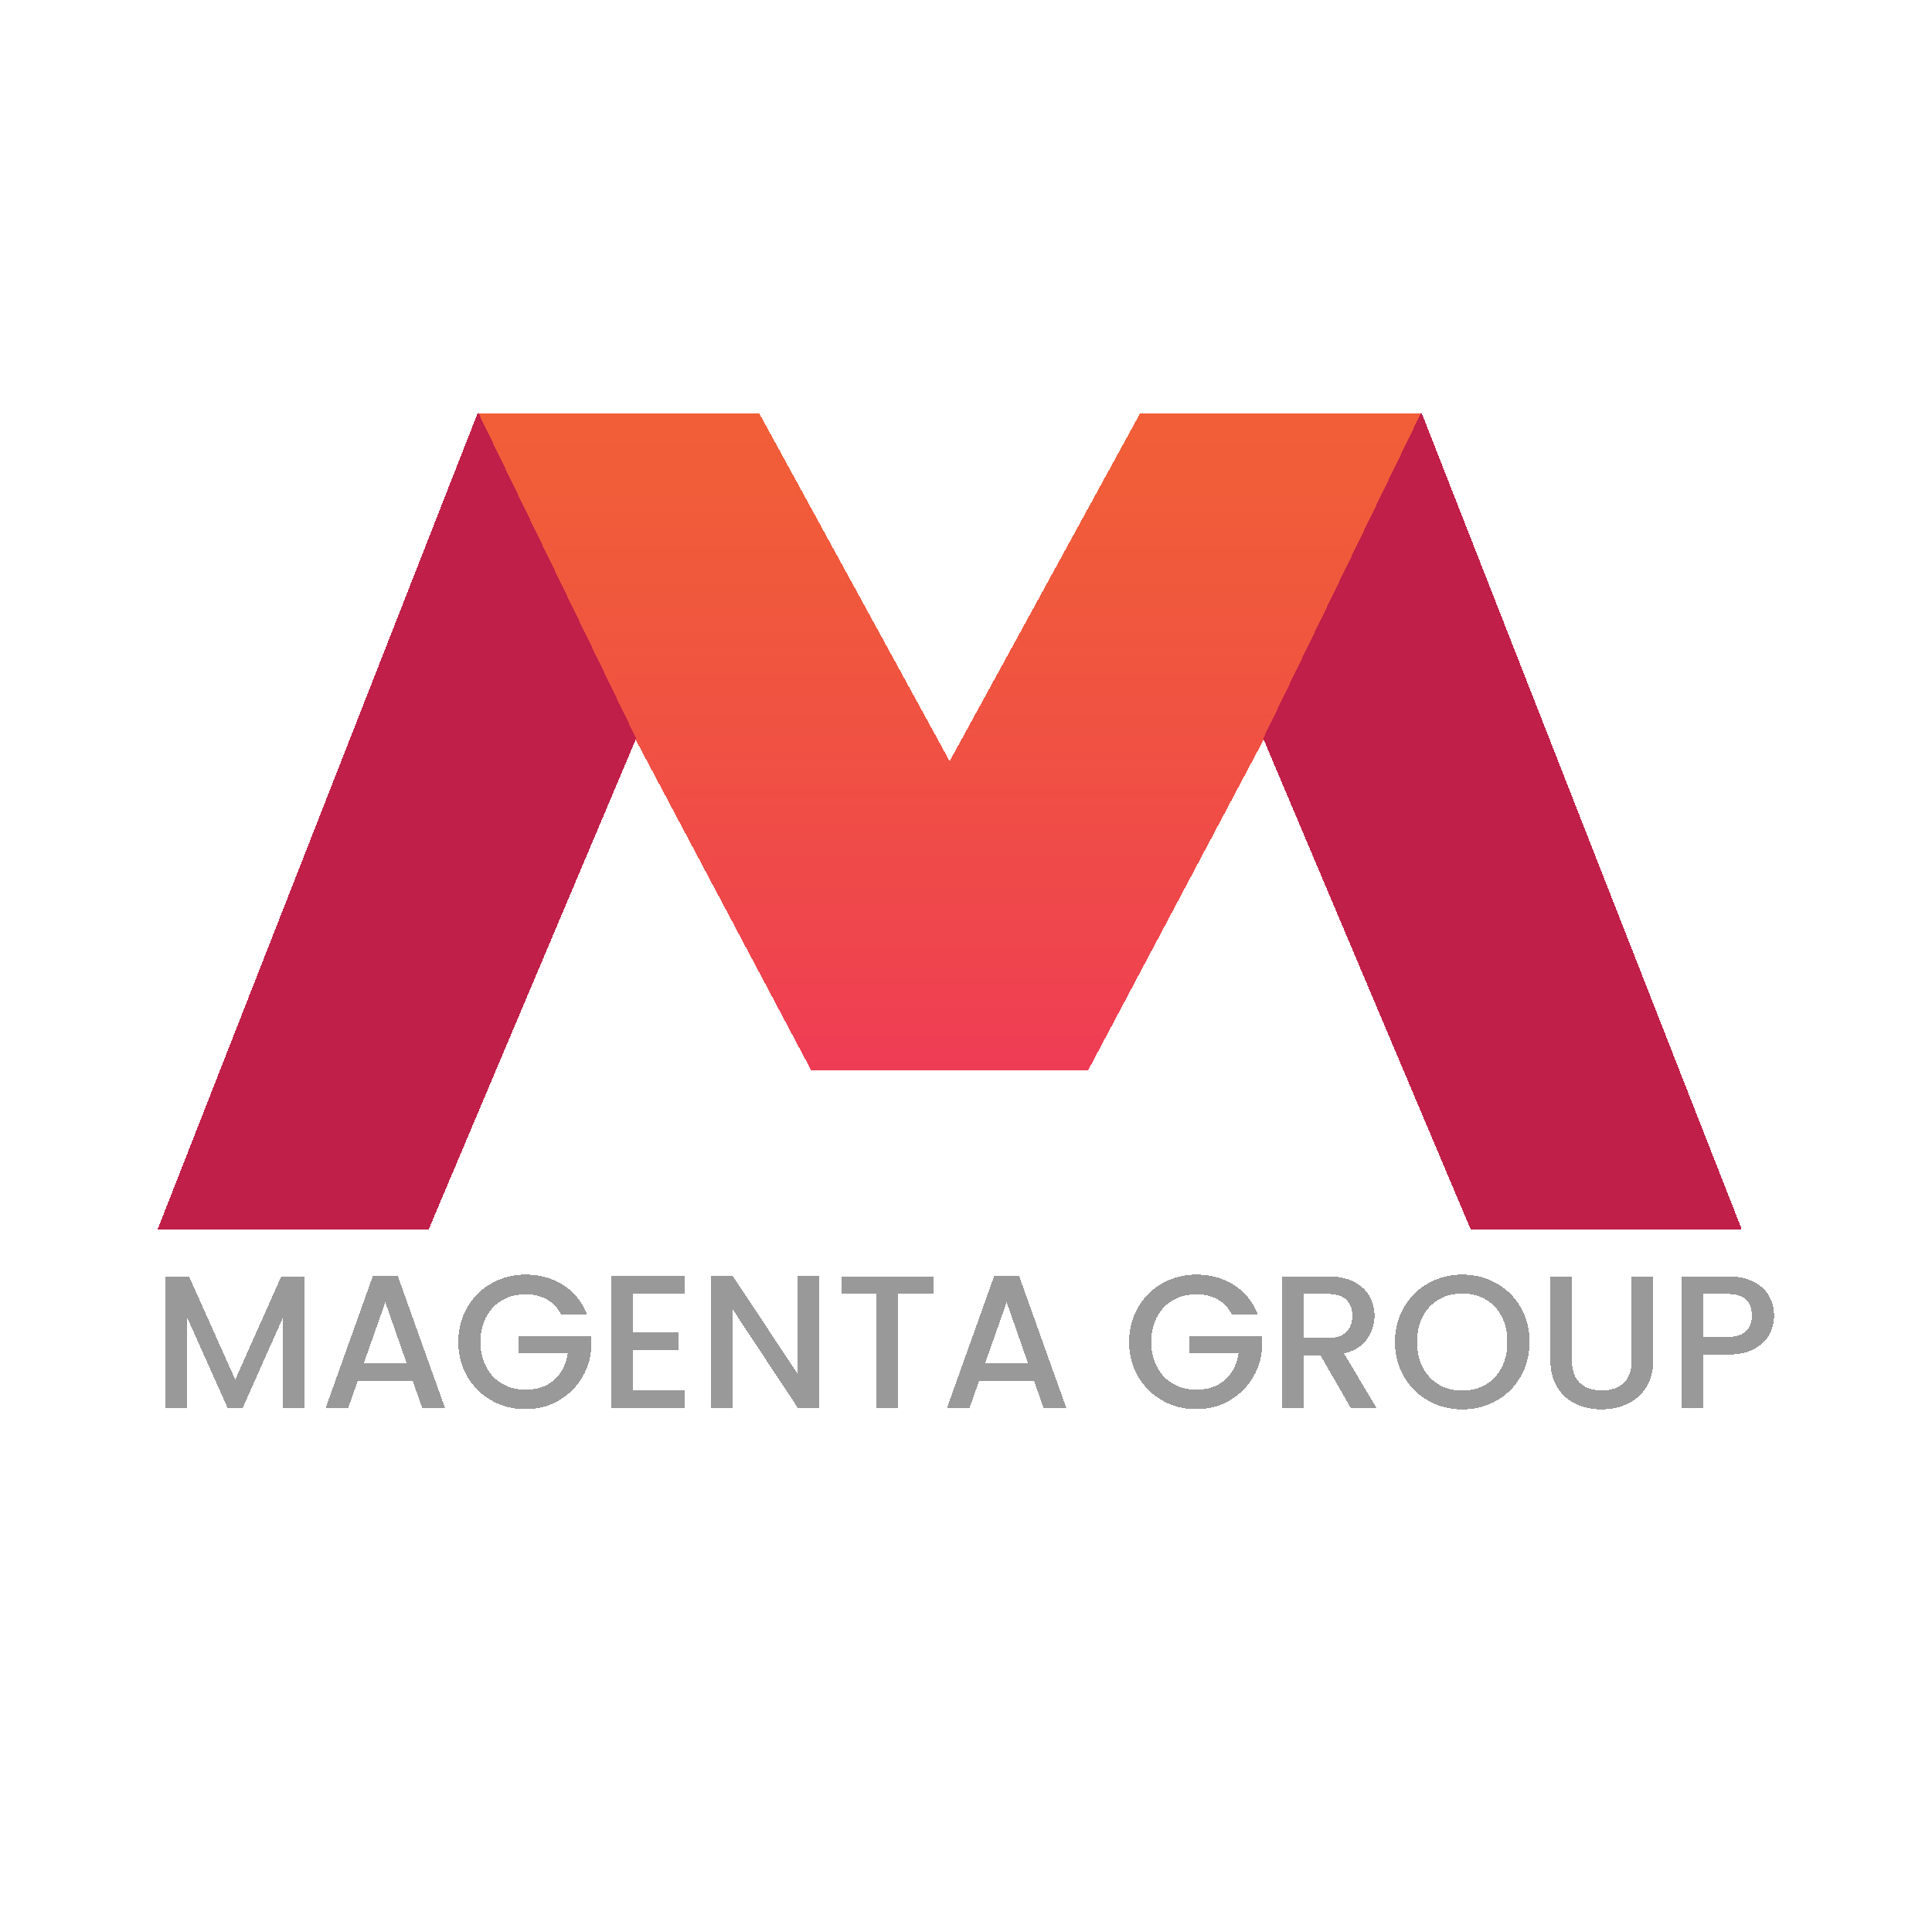 Magenta Group